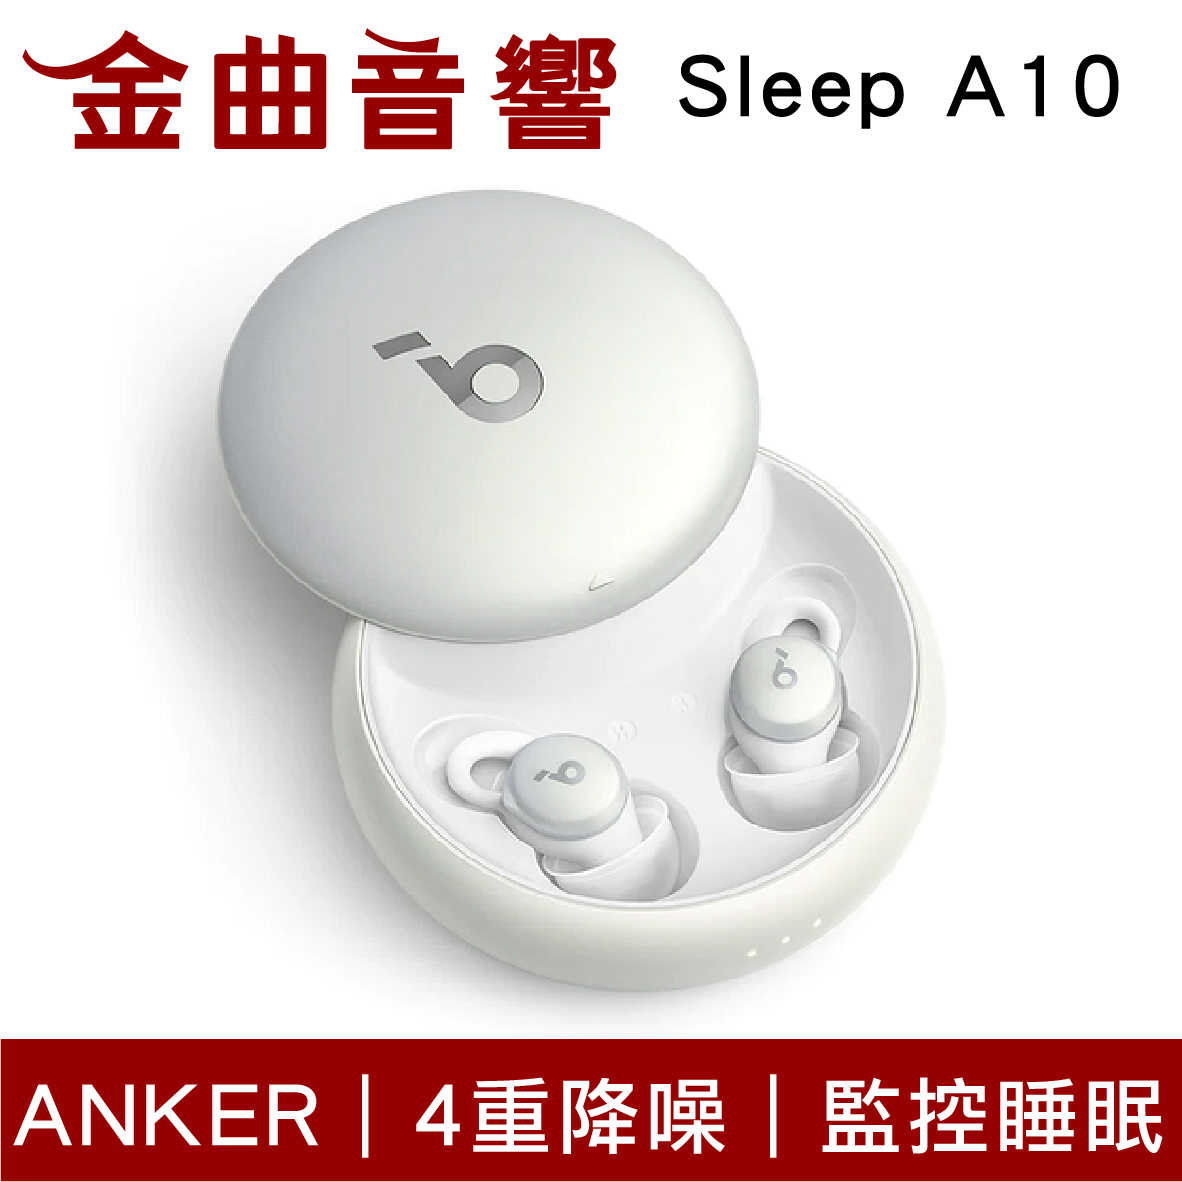 Anker Soundcore Sleep A10 睡眠設計 自適應噪音調節 超高續航 真無線 藍牙耳機 | 金曲音響